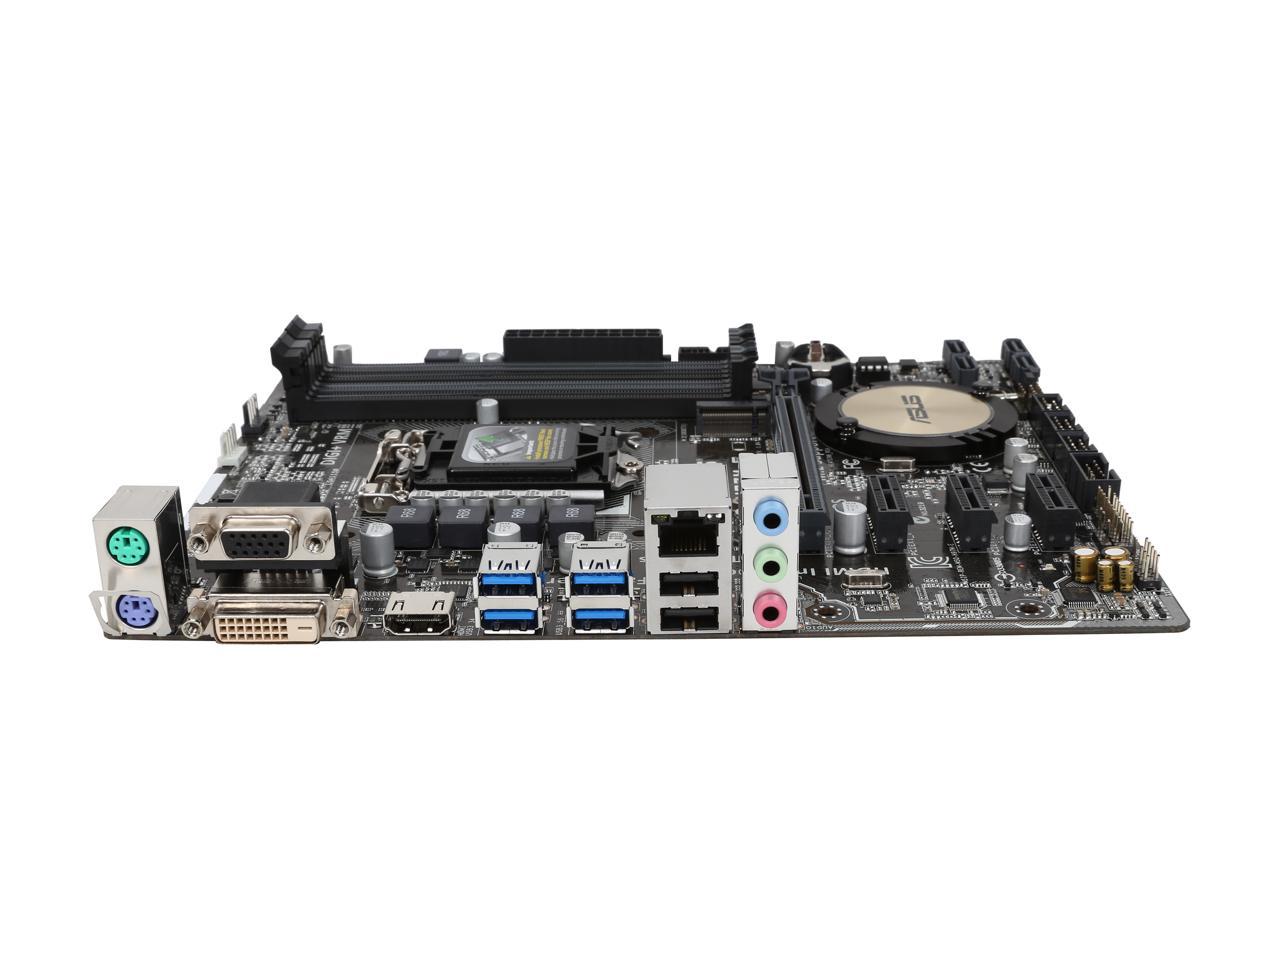 ASUS H97M-E/CSM LGA 1150 Intel H97 HDMI SATA 6Gb/s USB 3.0 Micro ATX Intel Motherboard